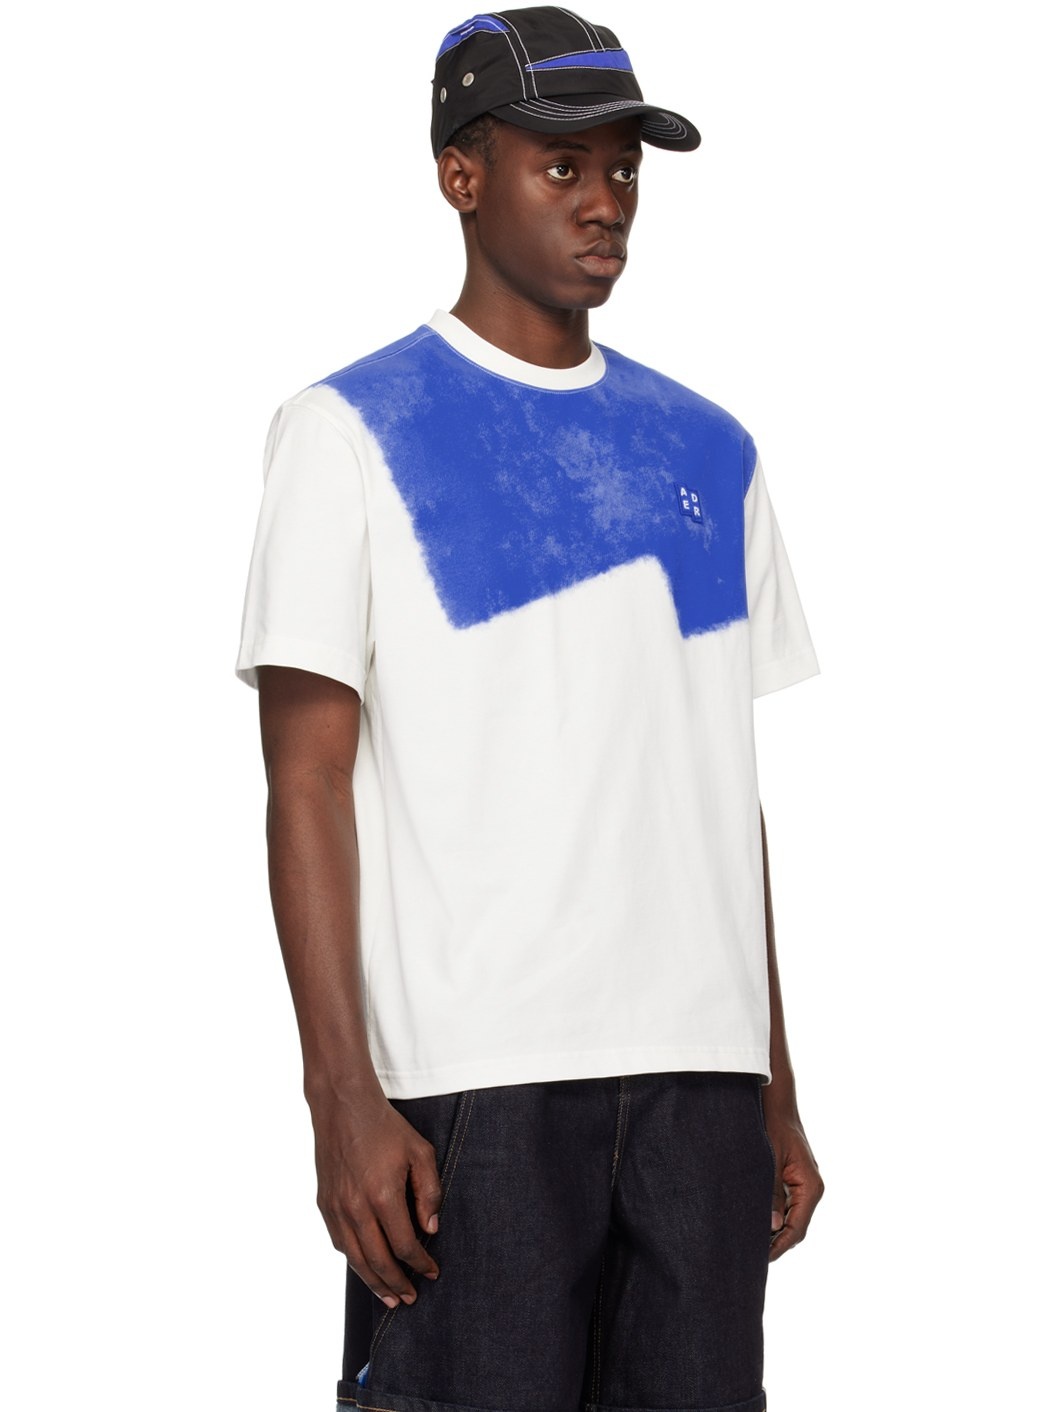 White & Blue Printed T-Shirt - 2